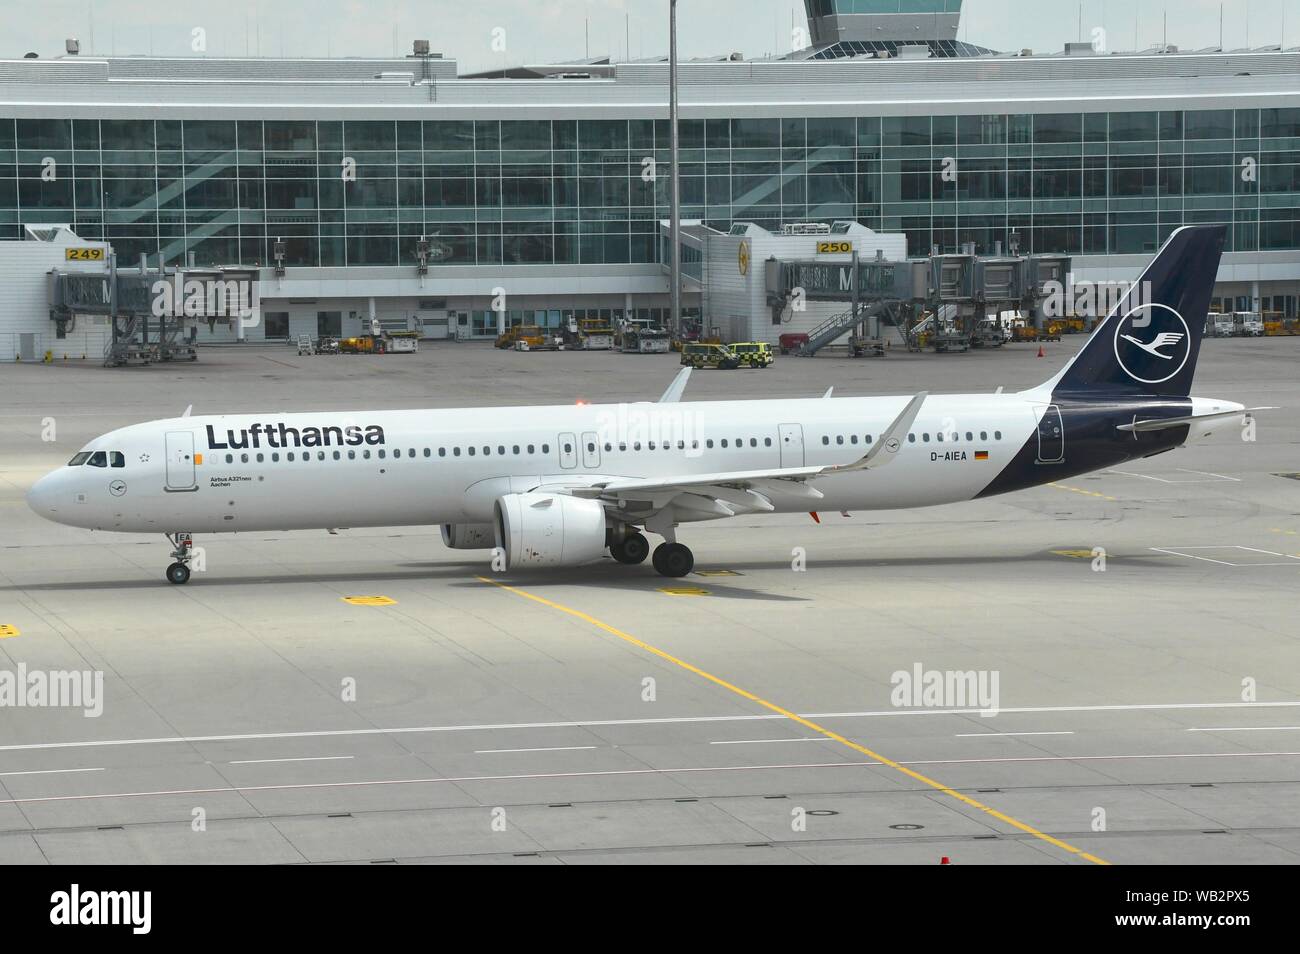 Lufthansa aircraft at Munich airport Stock Photo